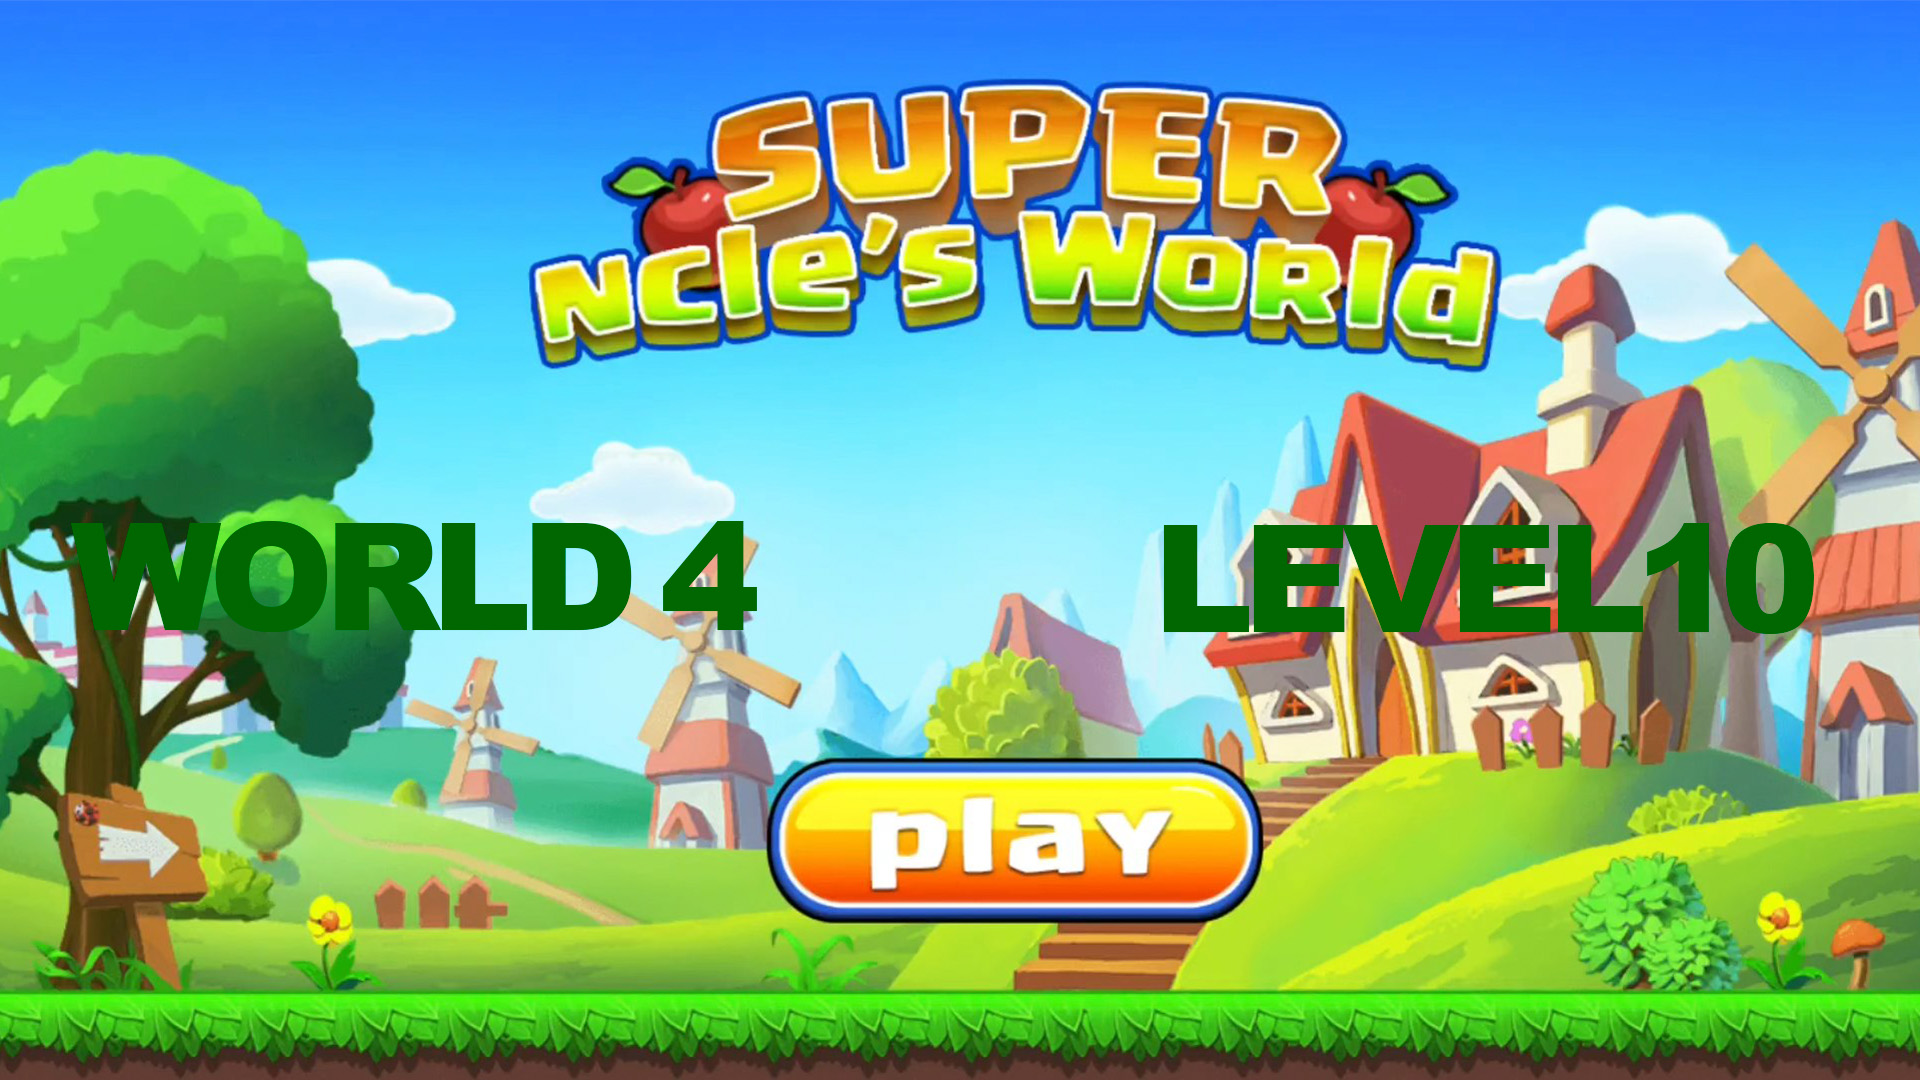 Super ncle's  World 4. Level 10.